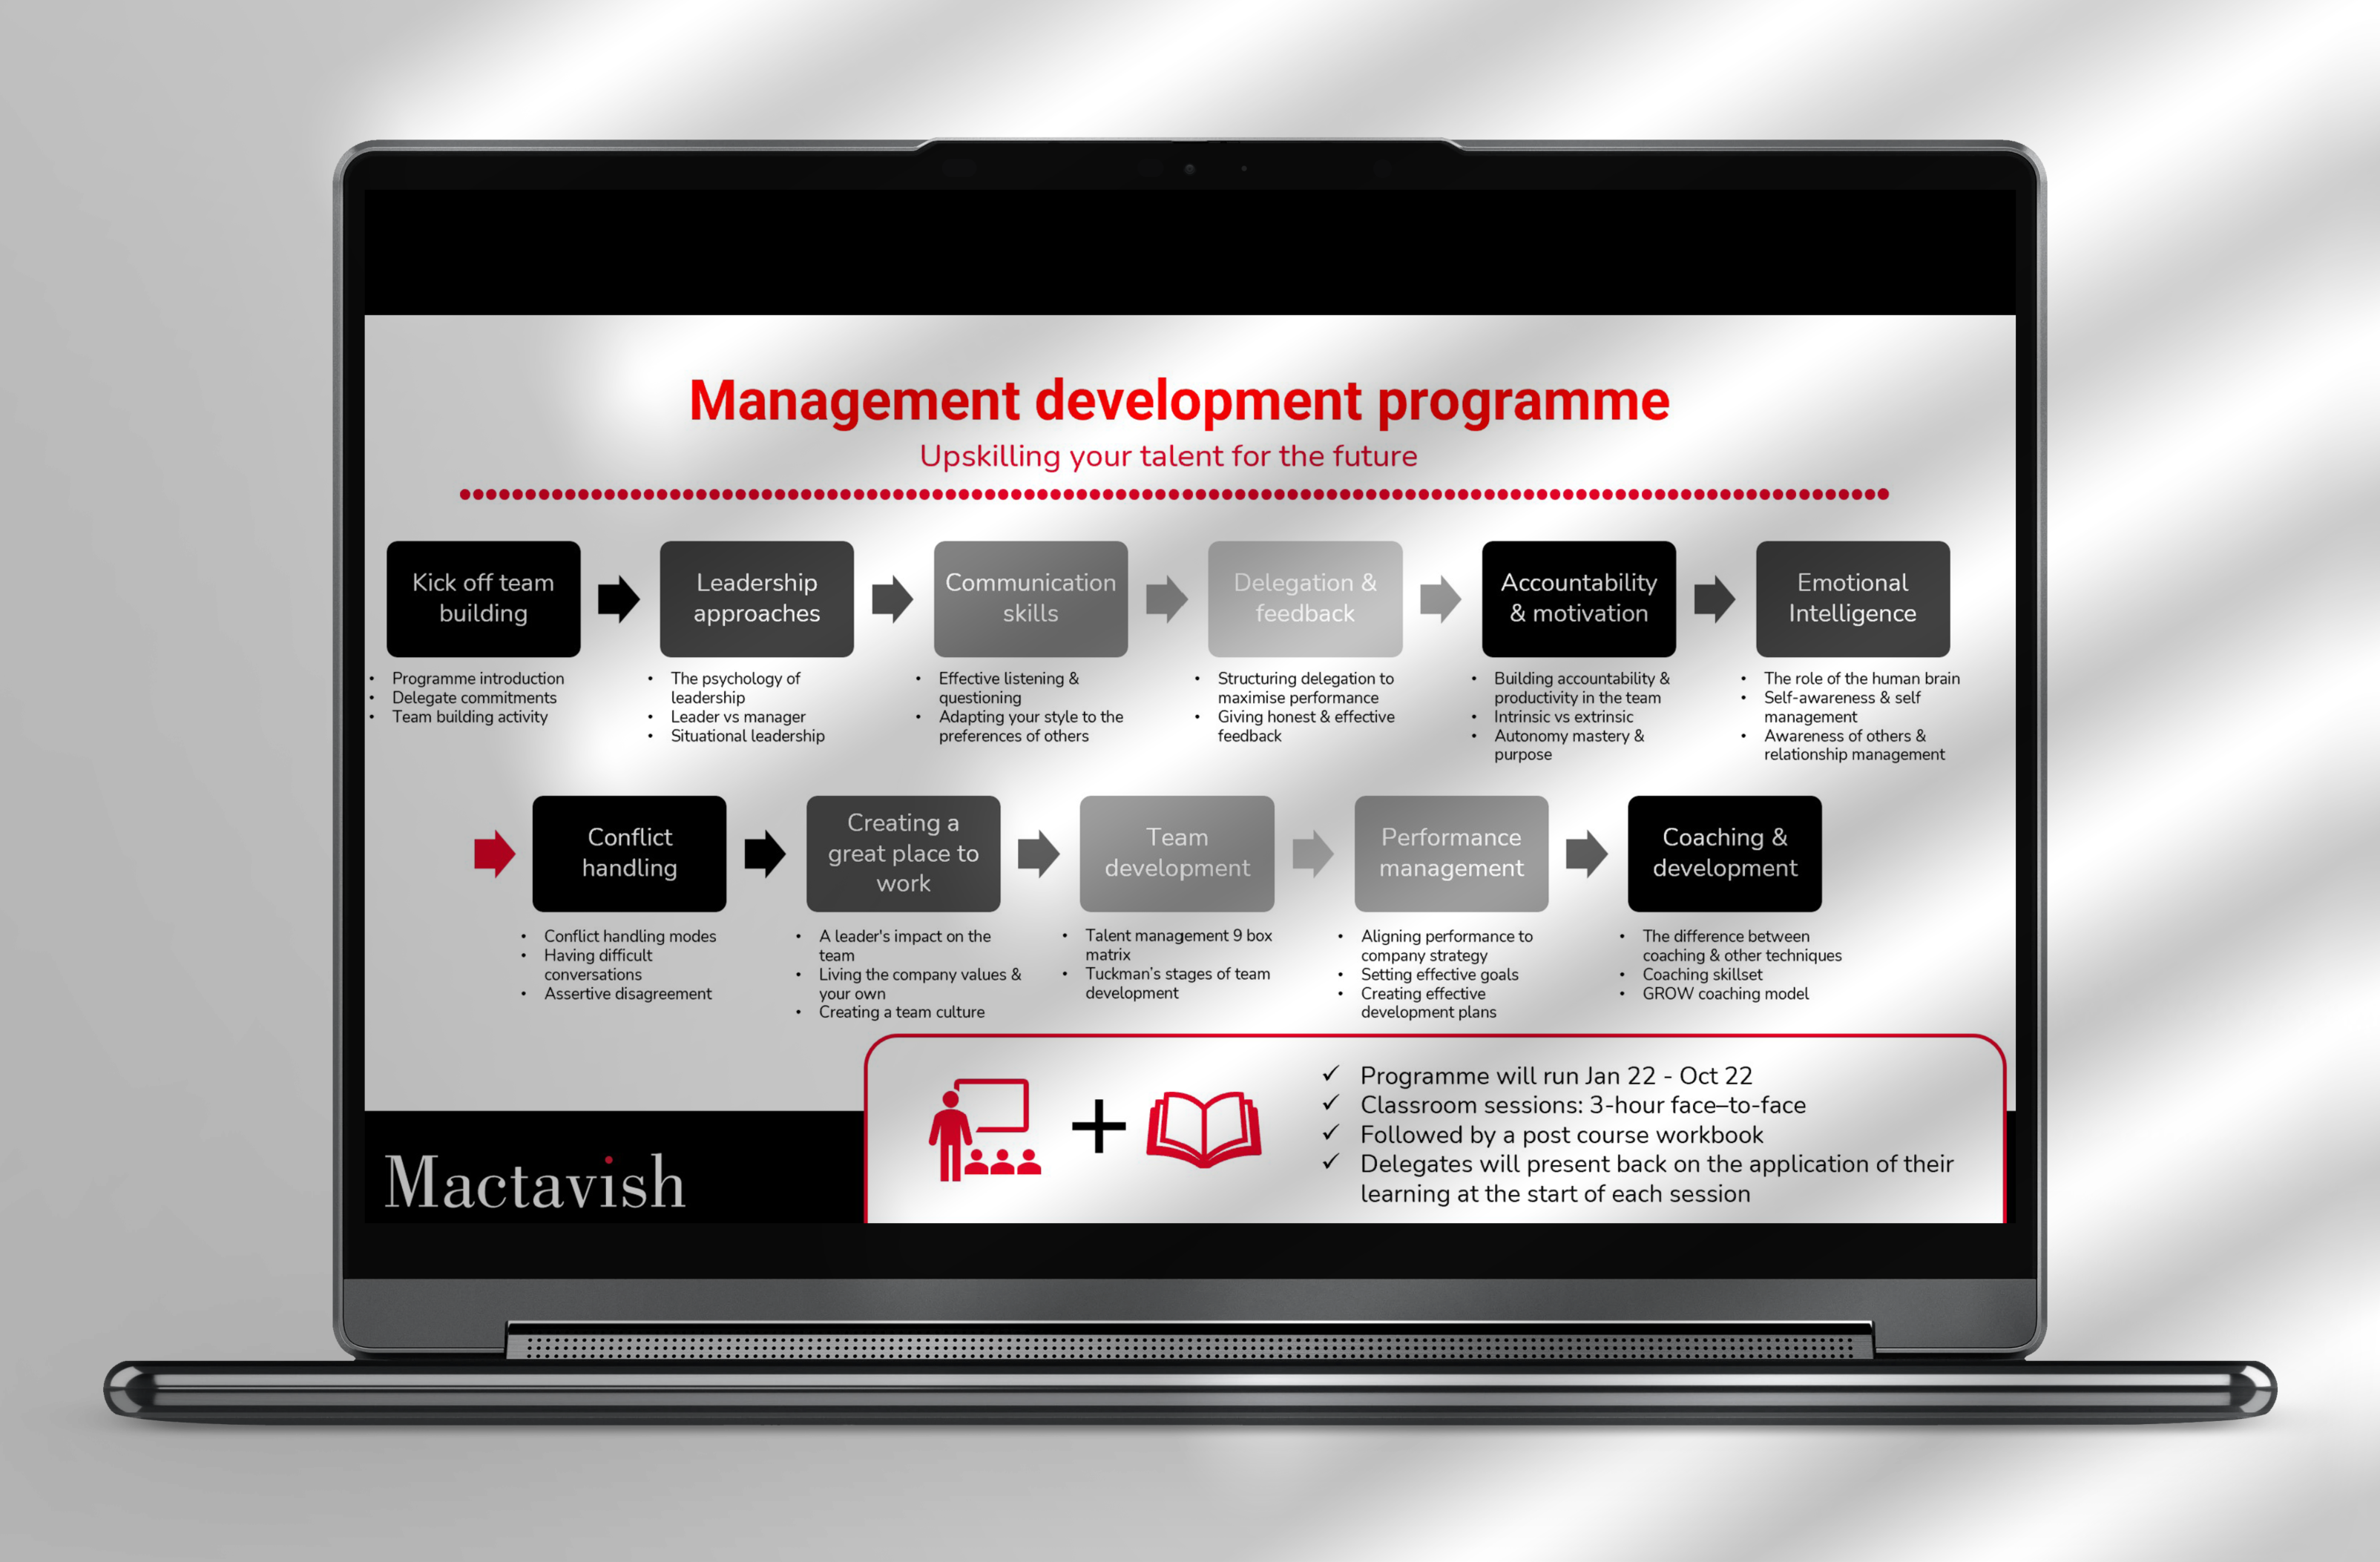 Mactavish course displayed on laptop